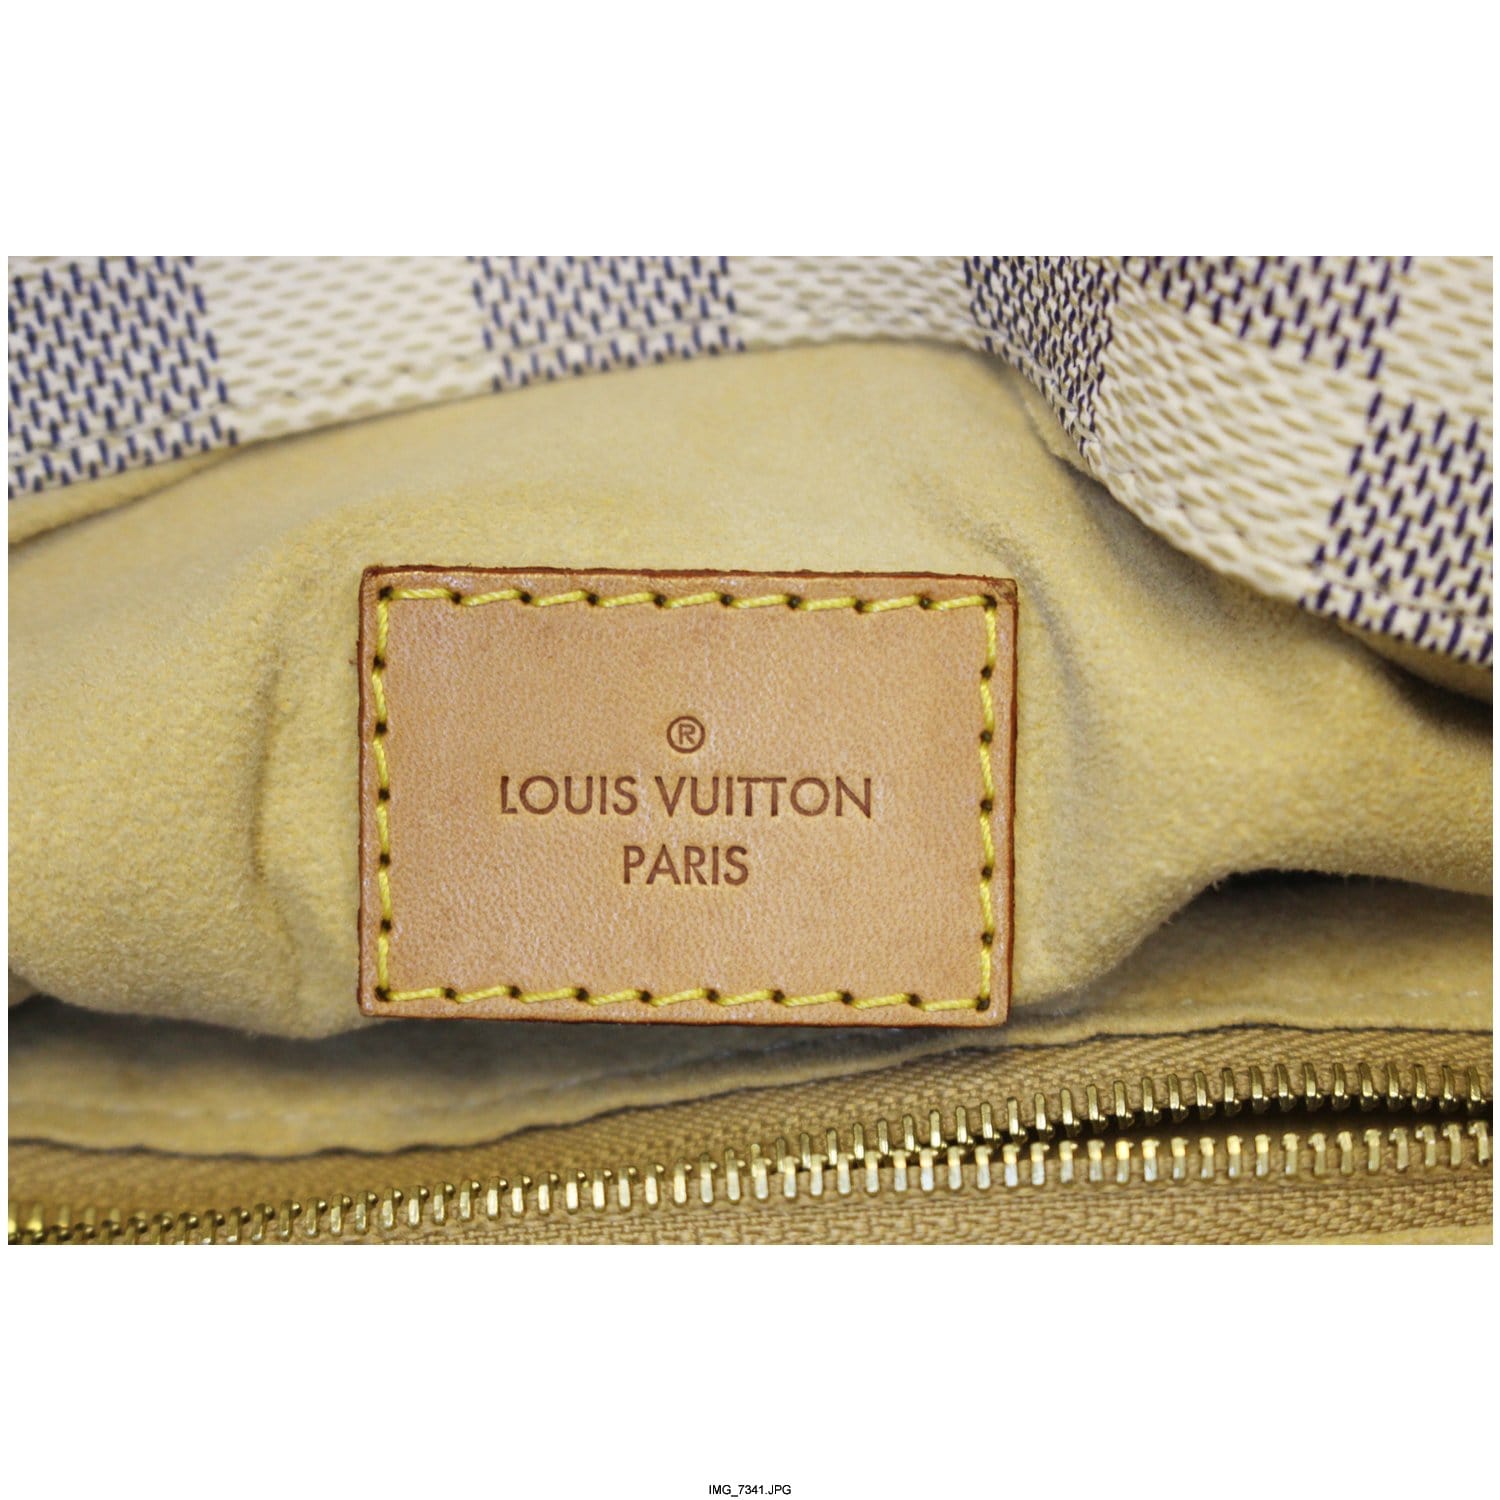 Sold at Auction: Louis Vuitton, LOUIS VUITTON, LARGE ARTSY DAMIER AZUR  CANVAS BAG, CREAMY WHITE AND BLUE CHECKERED RUBBERIZED COTTON